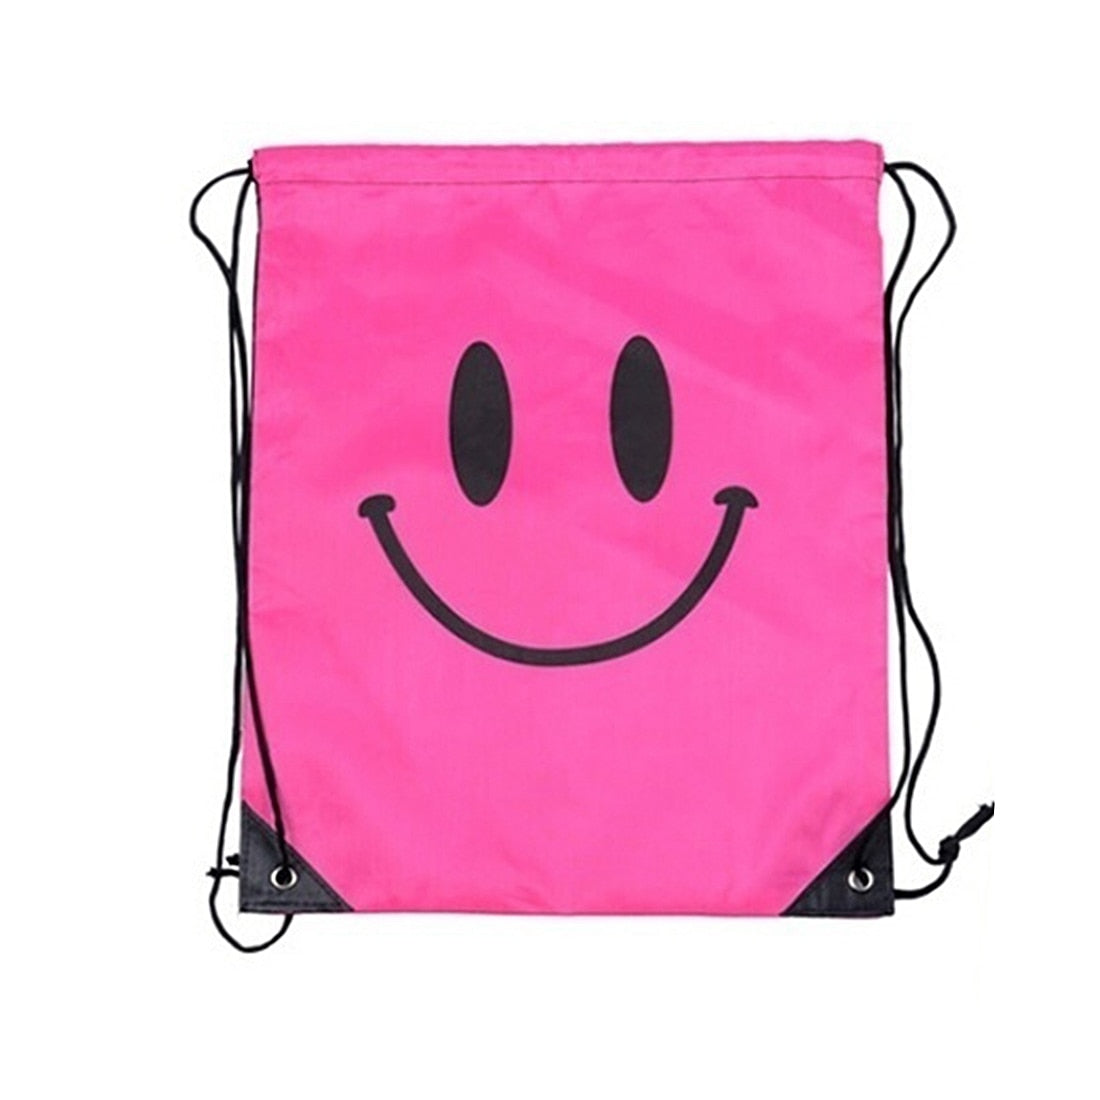 Smile lovely backpack  Drawstring Waterproof bag Rose red - ebowsos